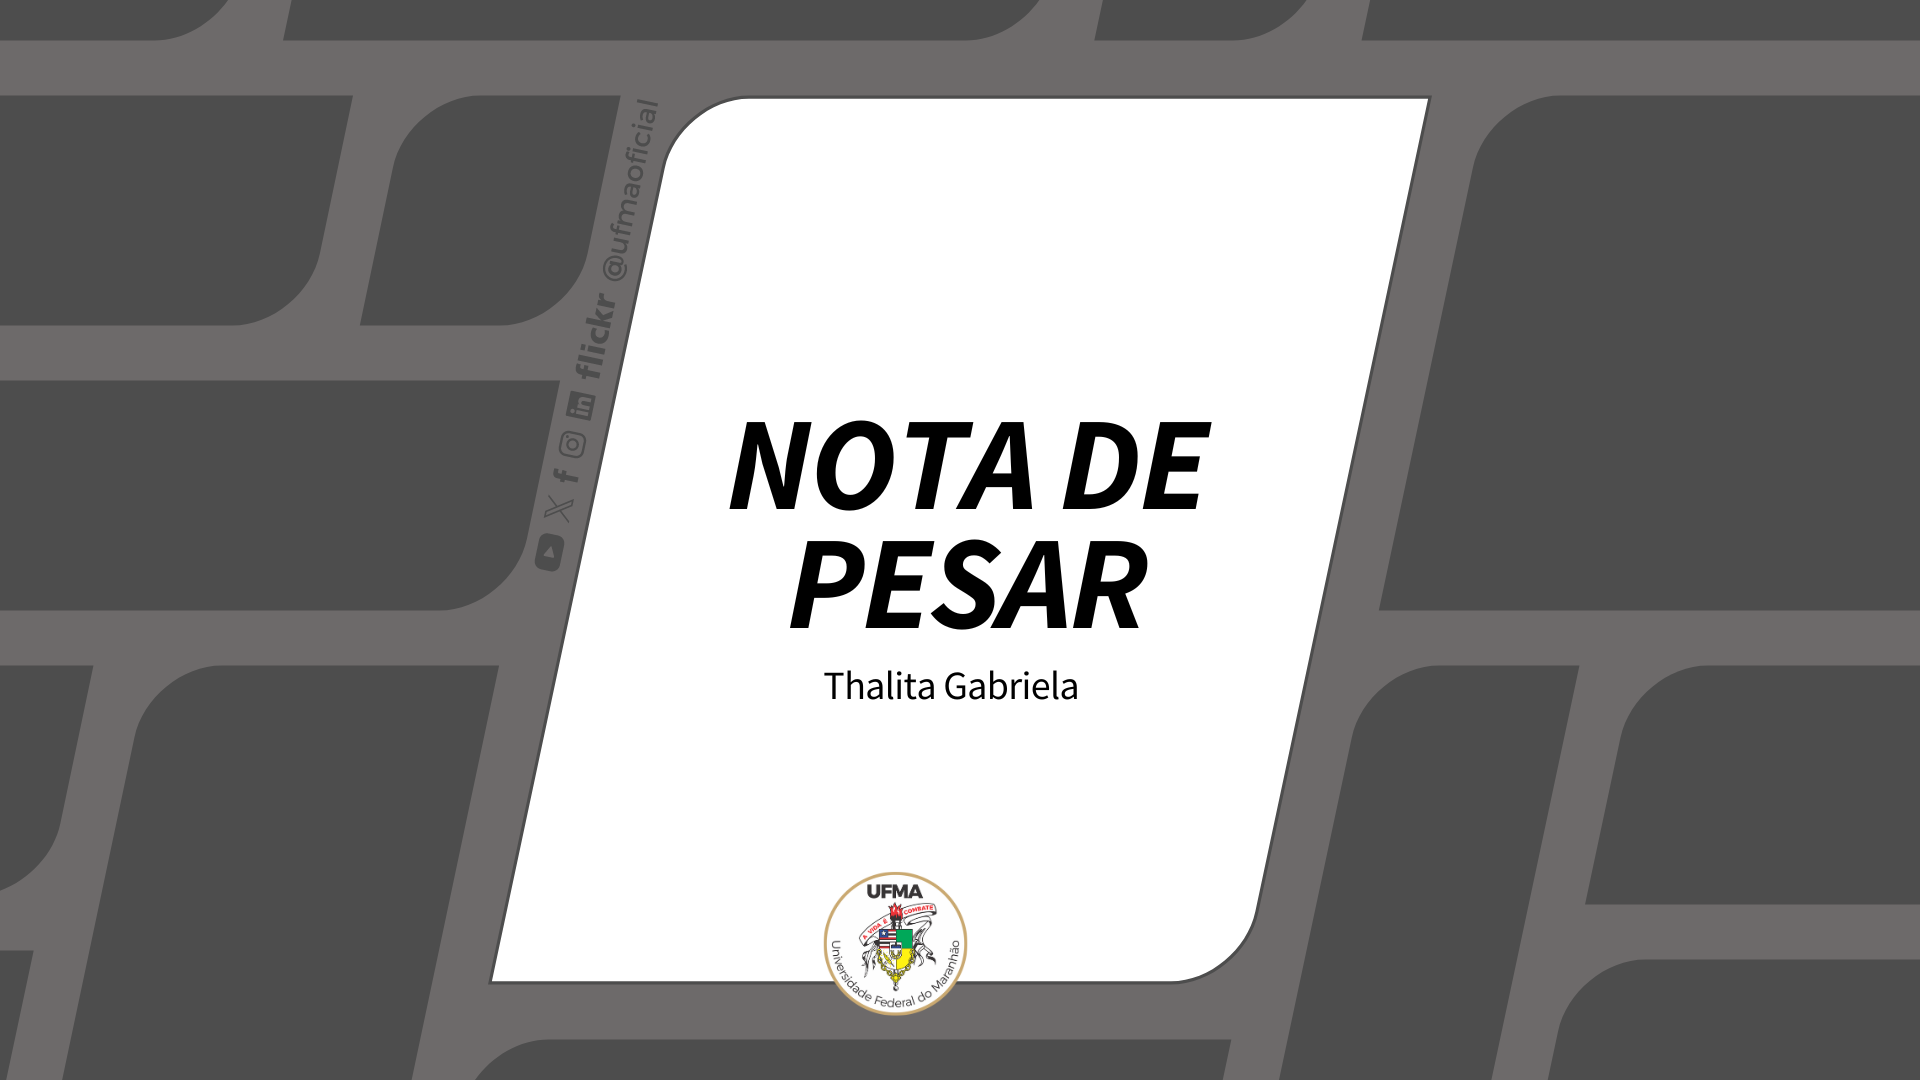 NOTA DE PESAR - Thalita Gabriela